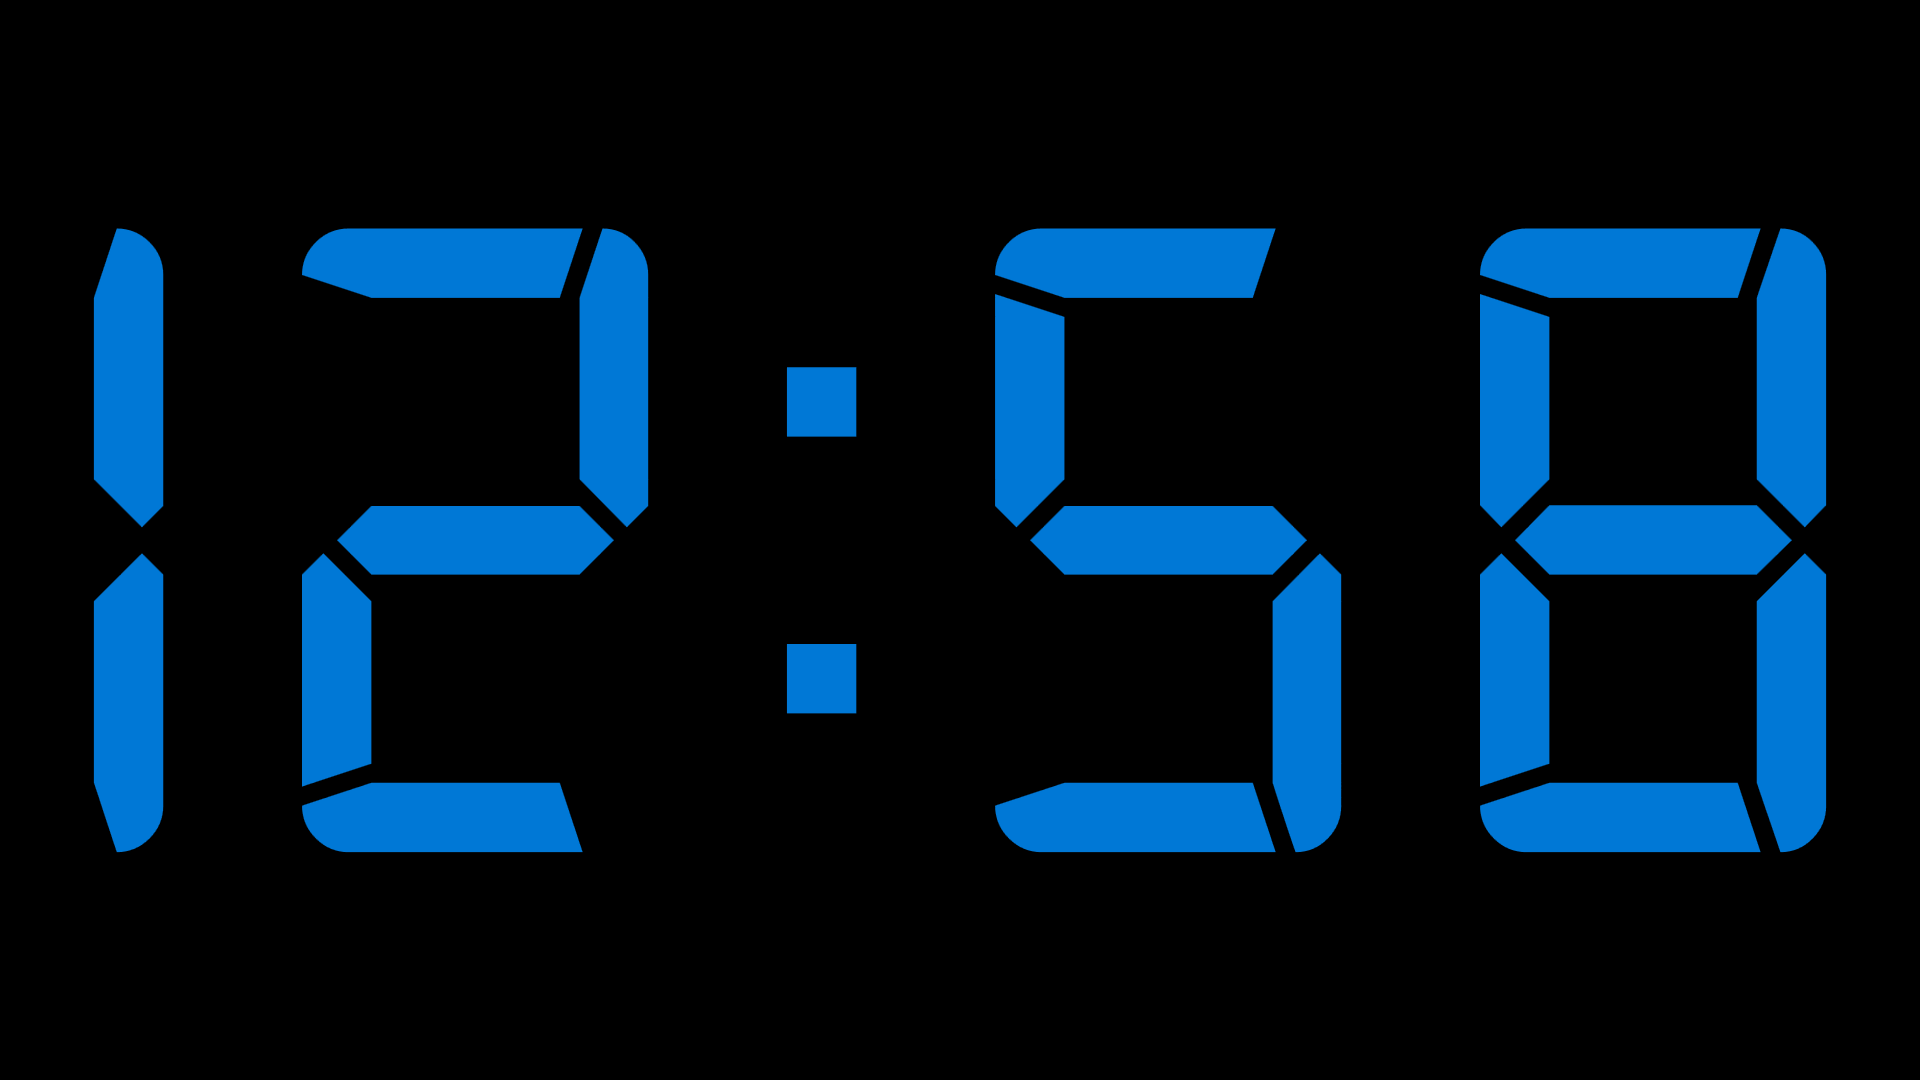 Время 23 0 6. Часы Digital Clock 200730138828.4. Цифровые часы на экран. Скринсейвер электронные часы. Большие электронные часы.